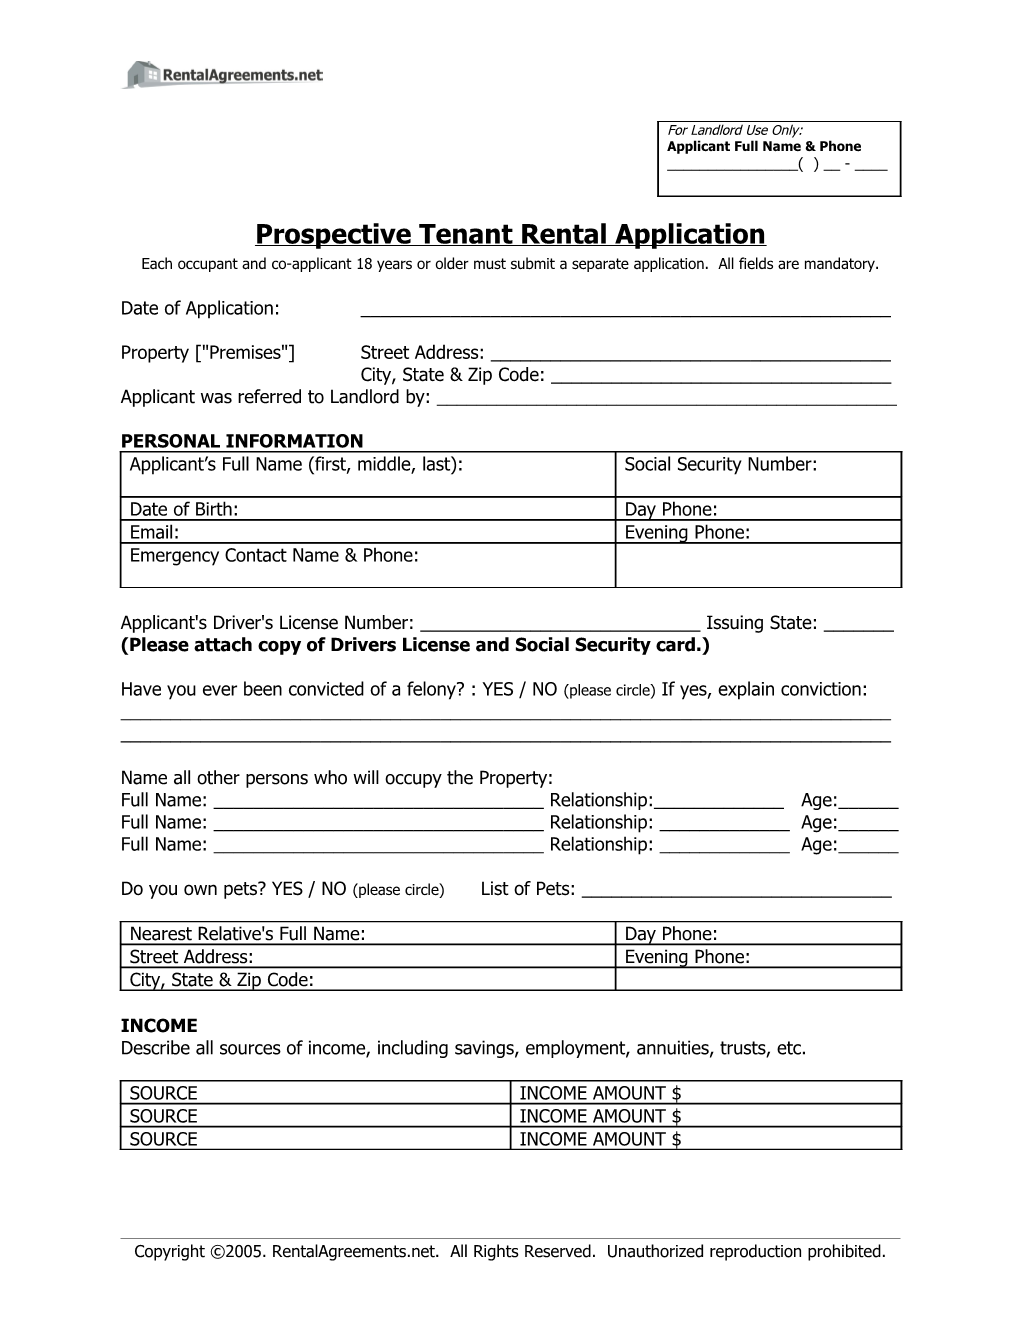 Prospective Tenant Rental Application